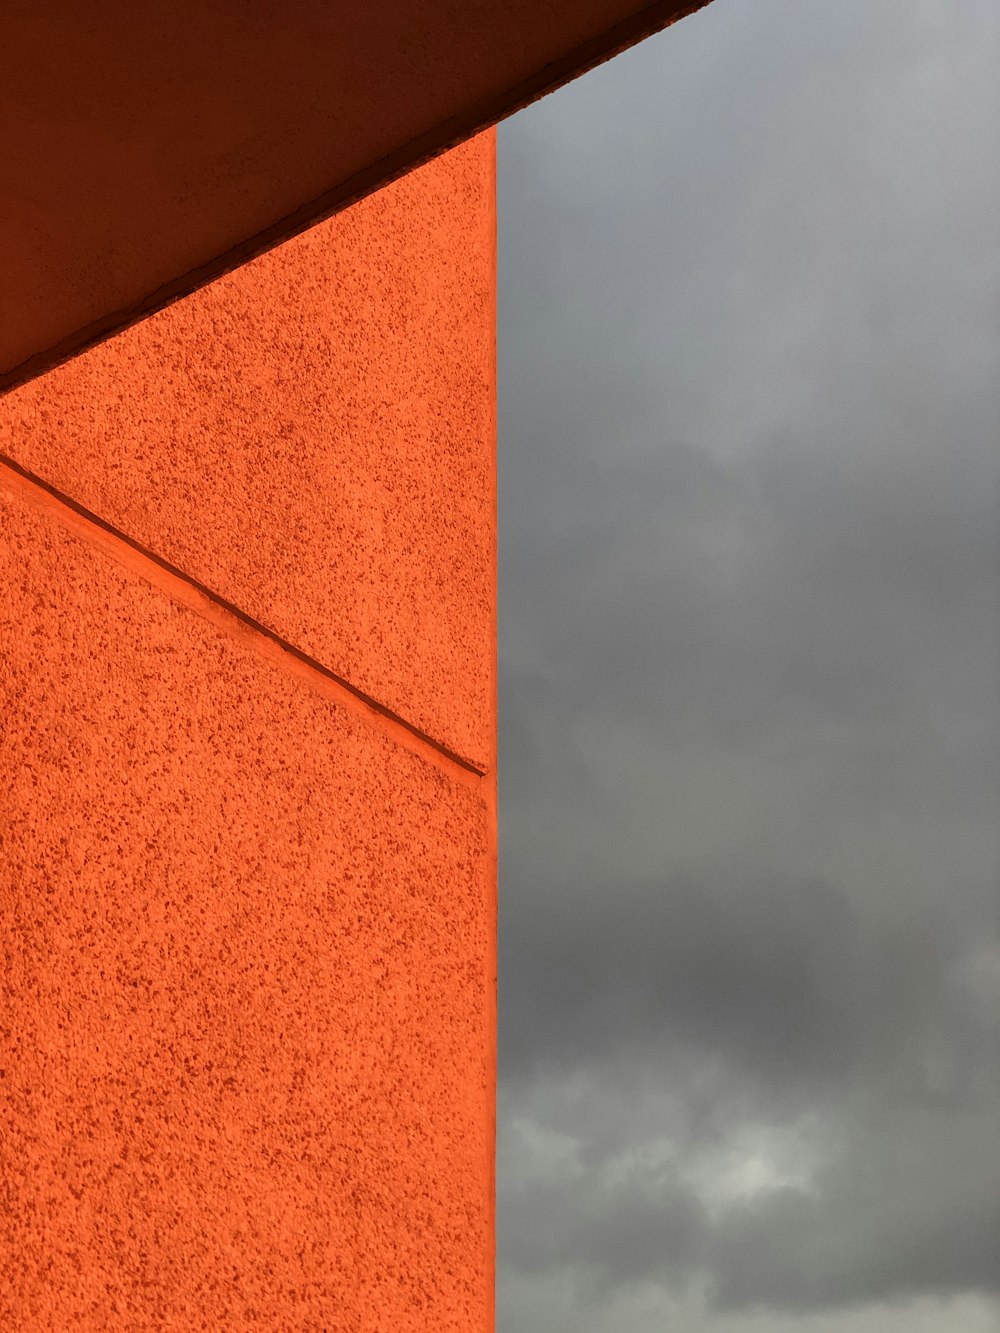 orange and gray concrete wall